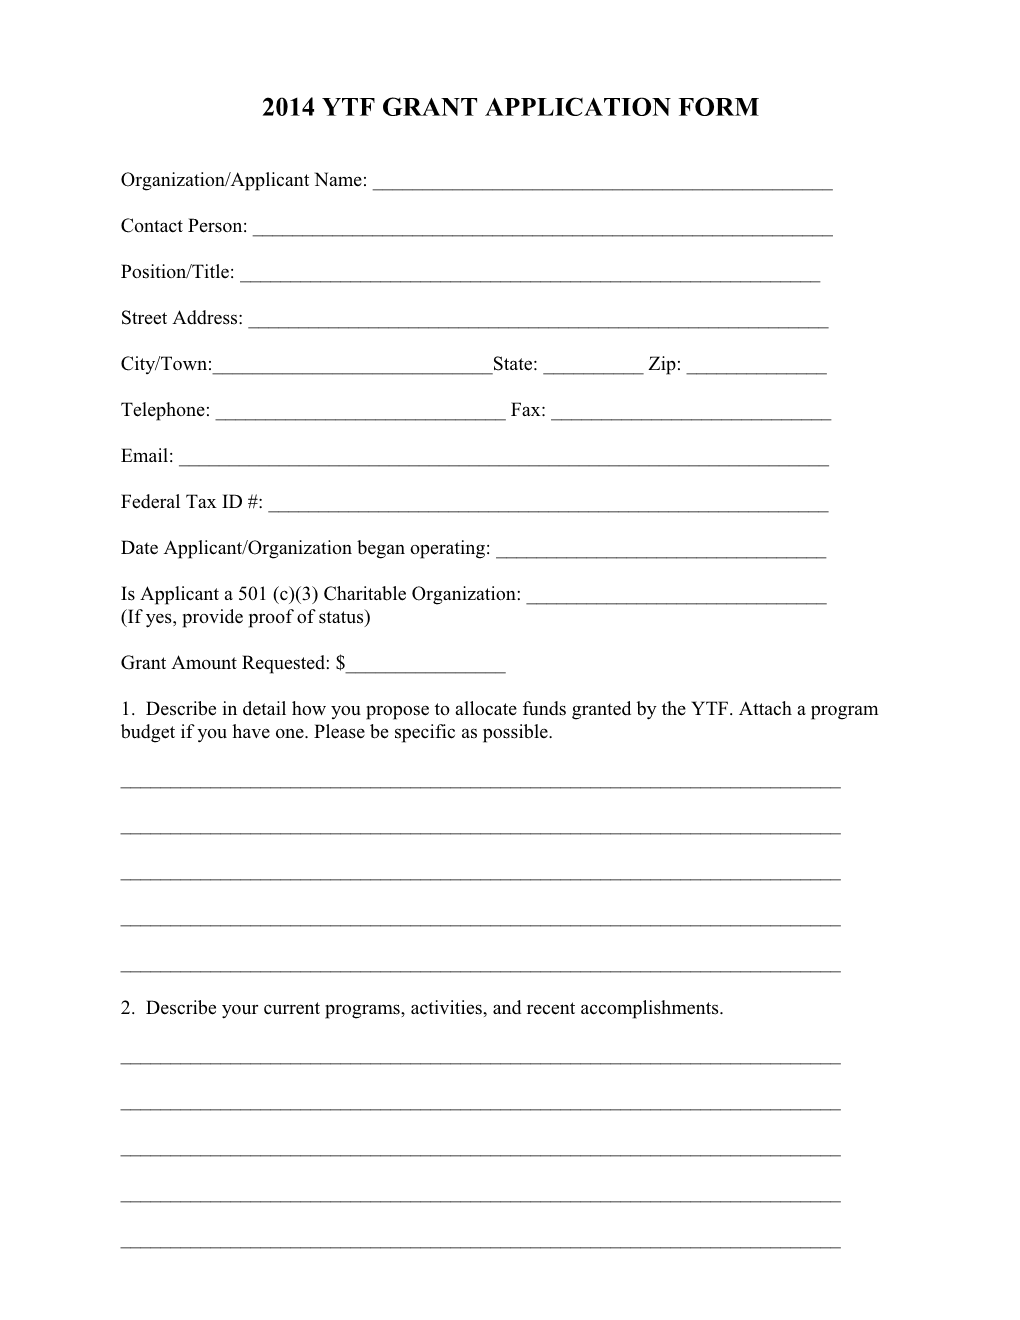 2012 Ytf Grant Application Form